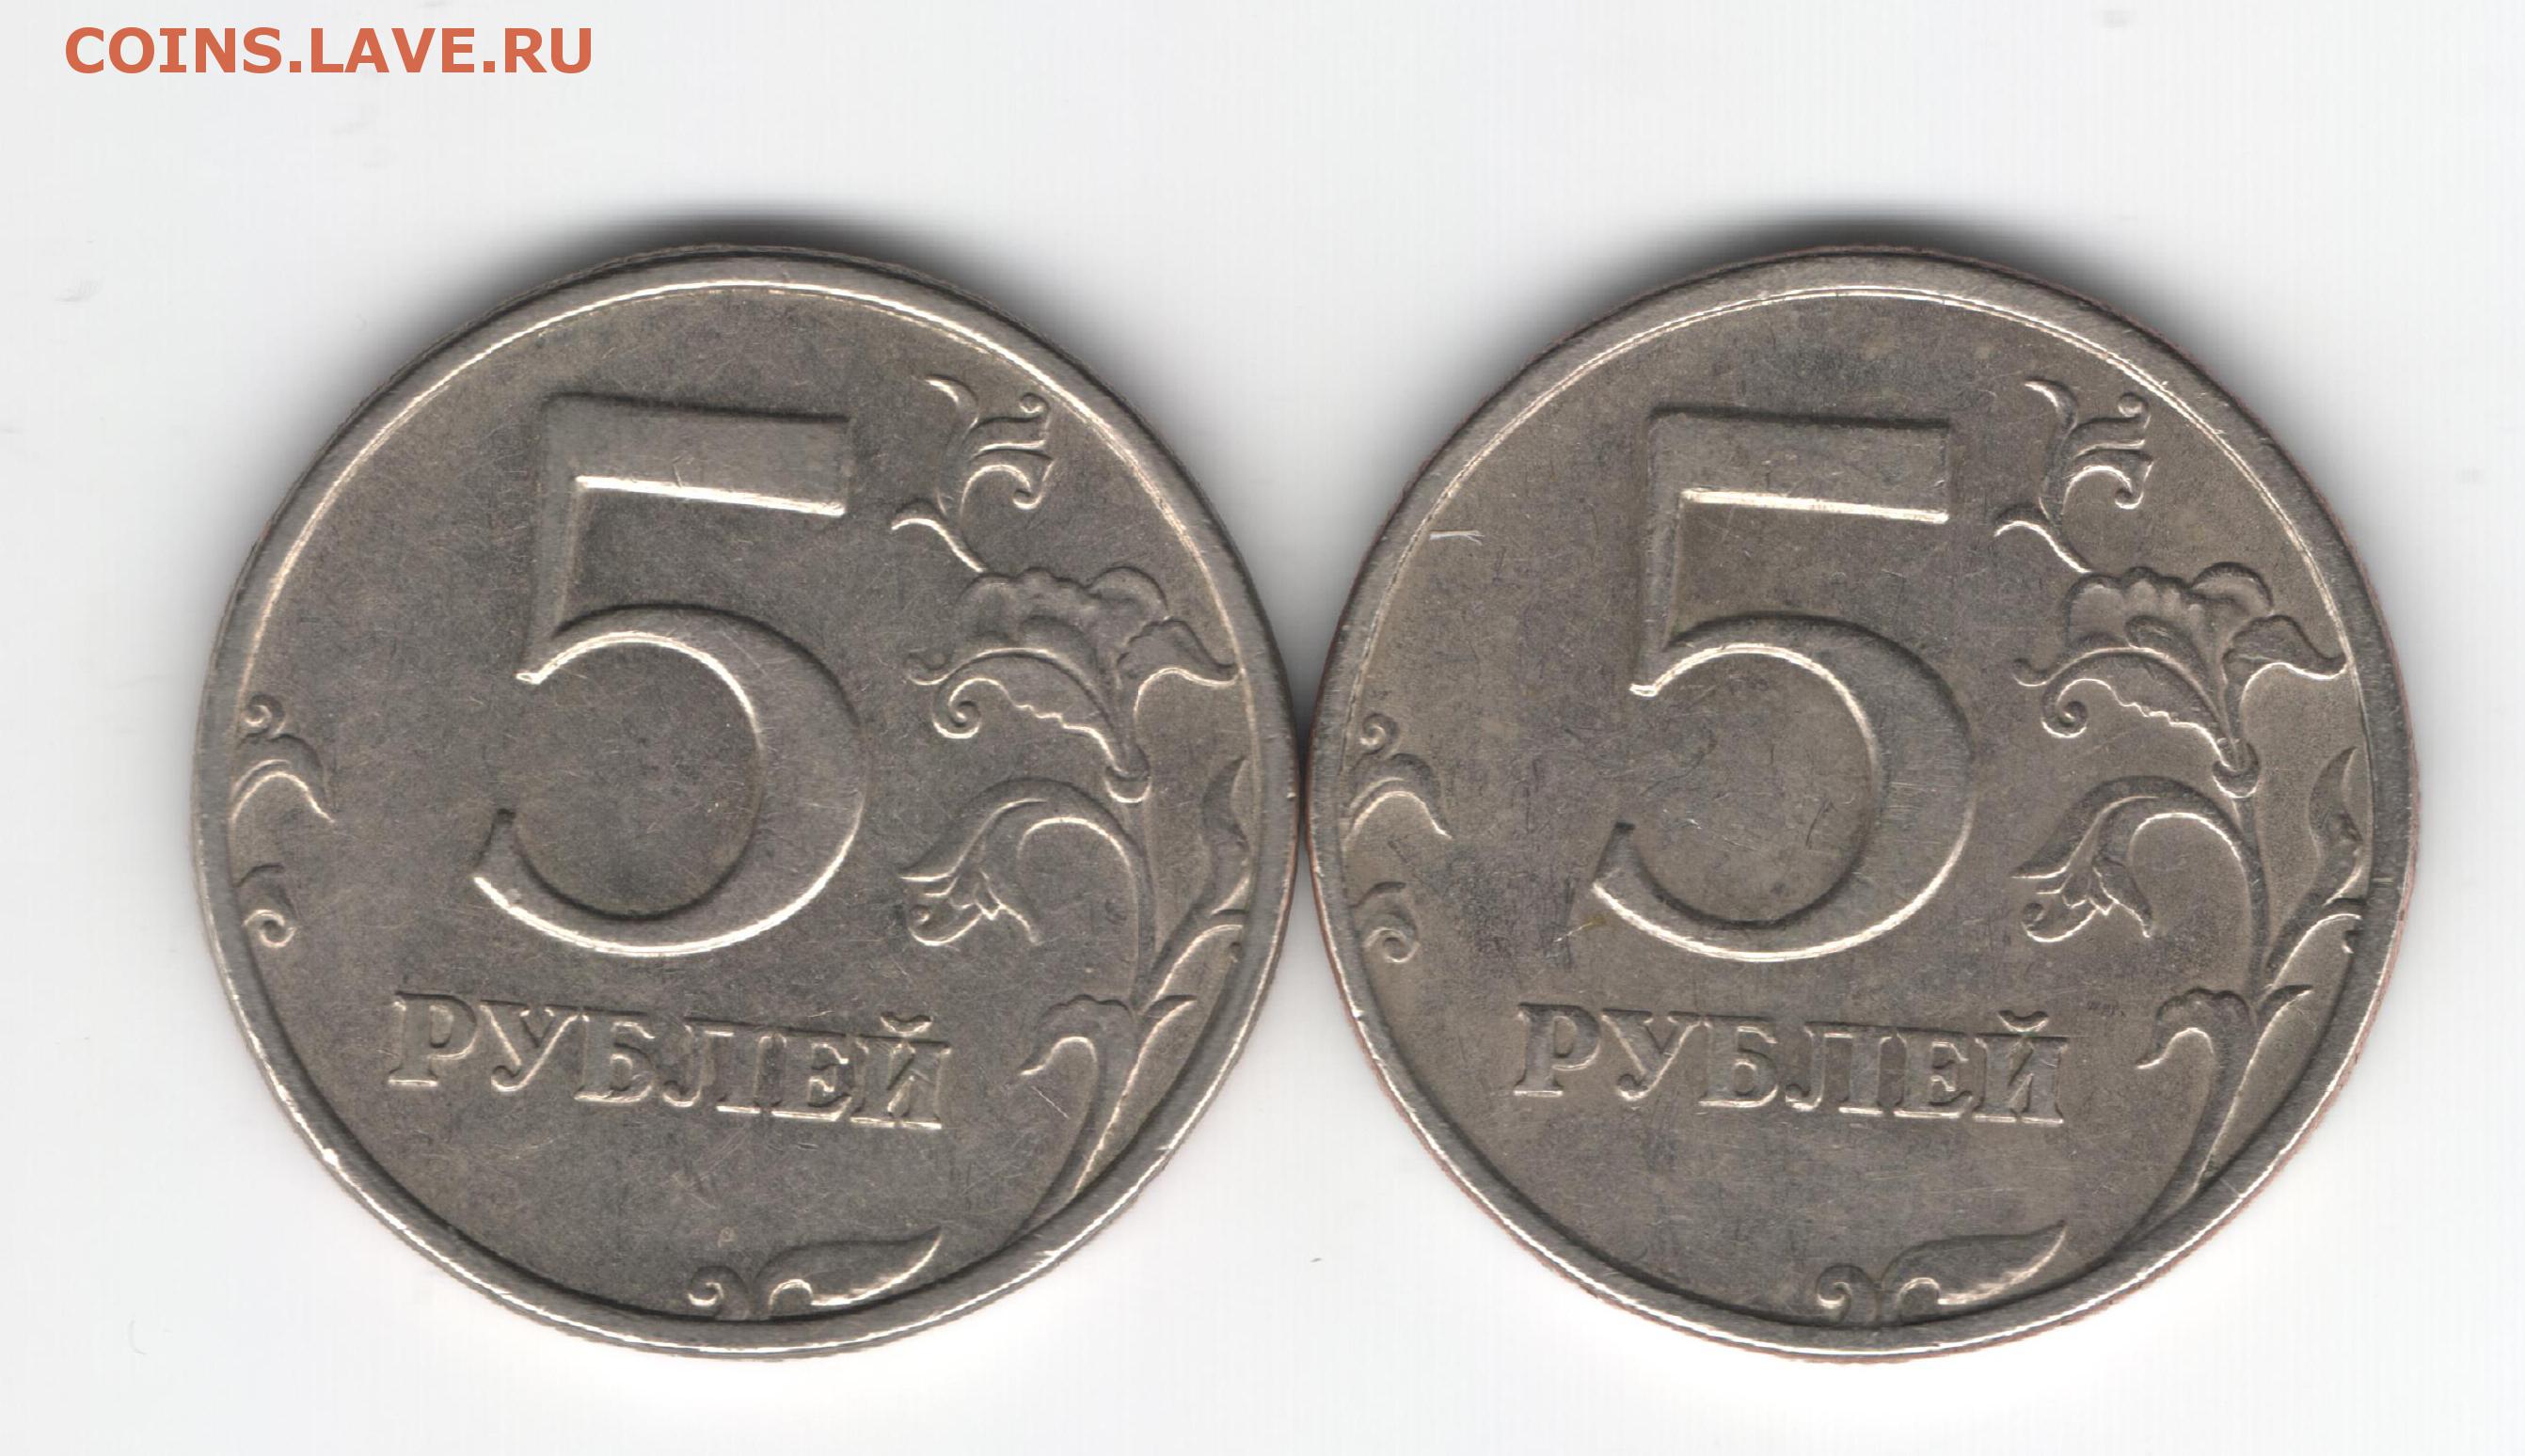 5 рублей номер на 5. Нумизматика 5 рублей 1997. 5 Рублей 1997 ММД. 5 Рублей 1997 г., раздвоенный контур цифры номинала.